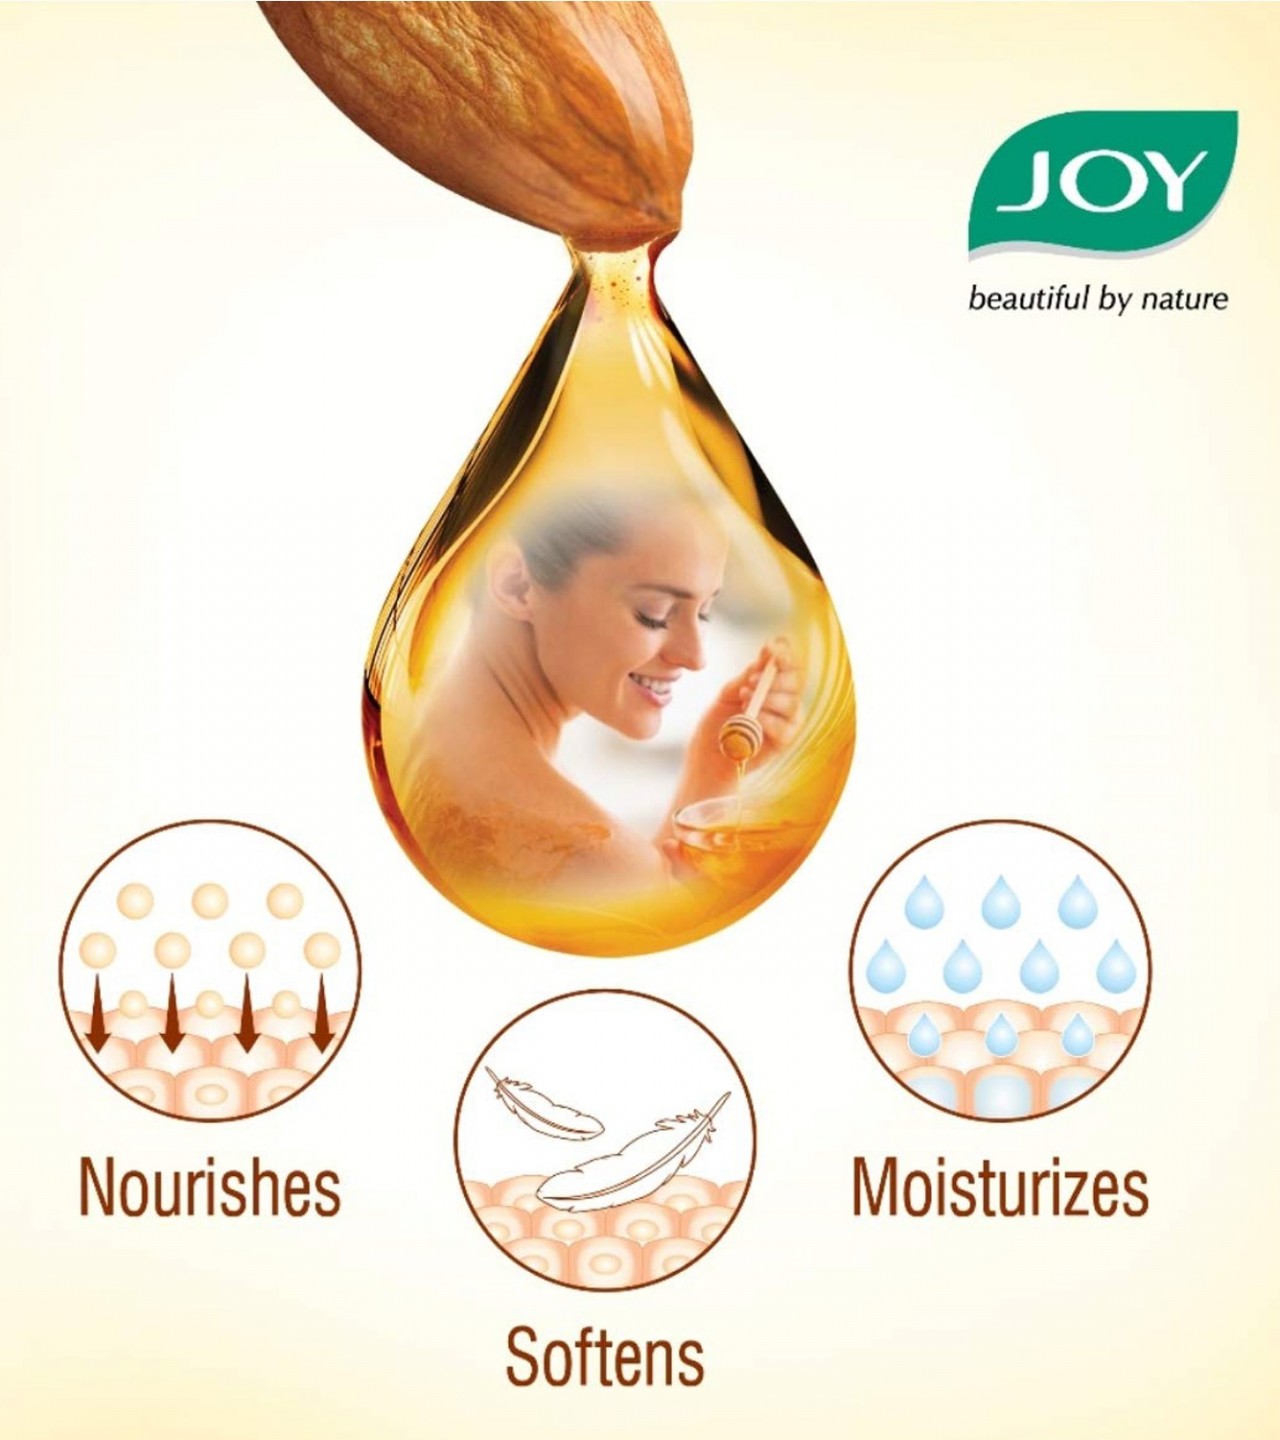 Joy Honey and Almonds Nourishing Body Lotion - 40 ml